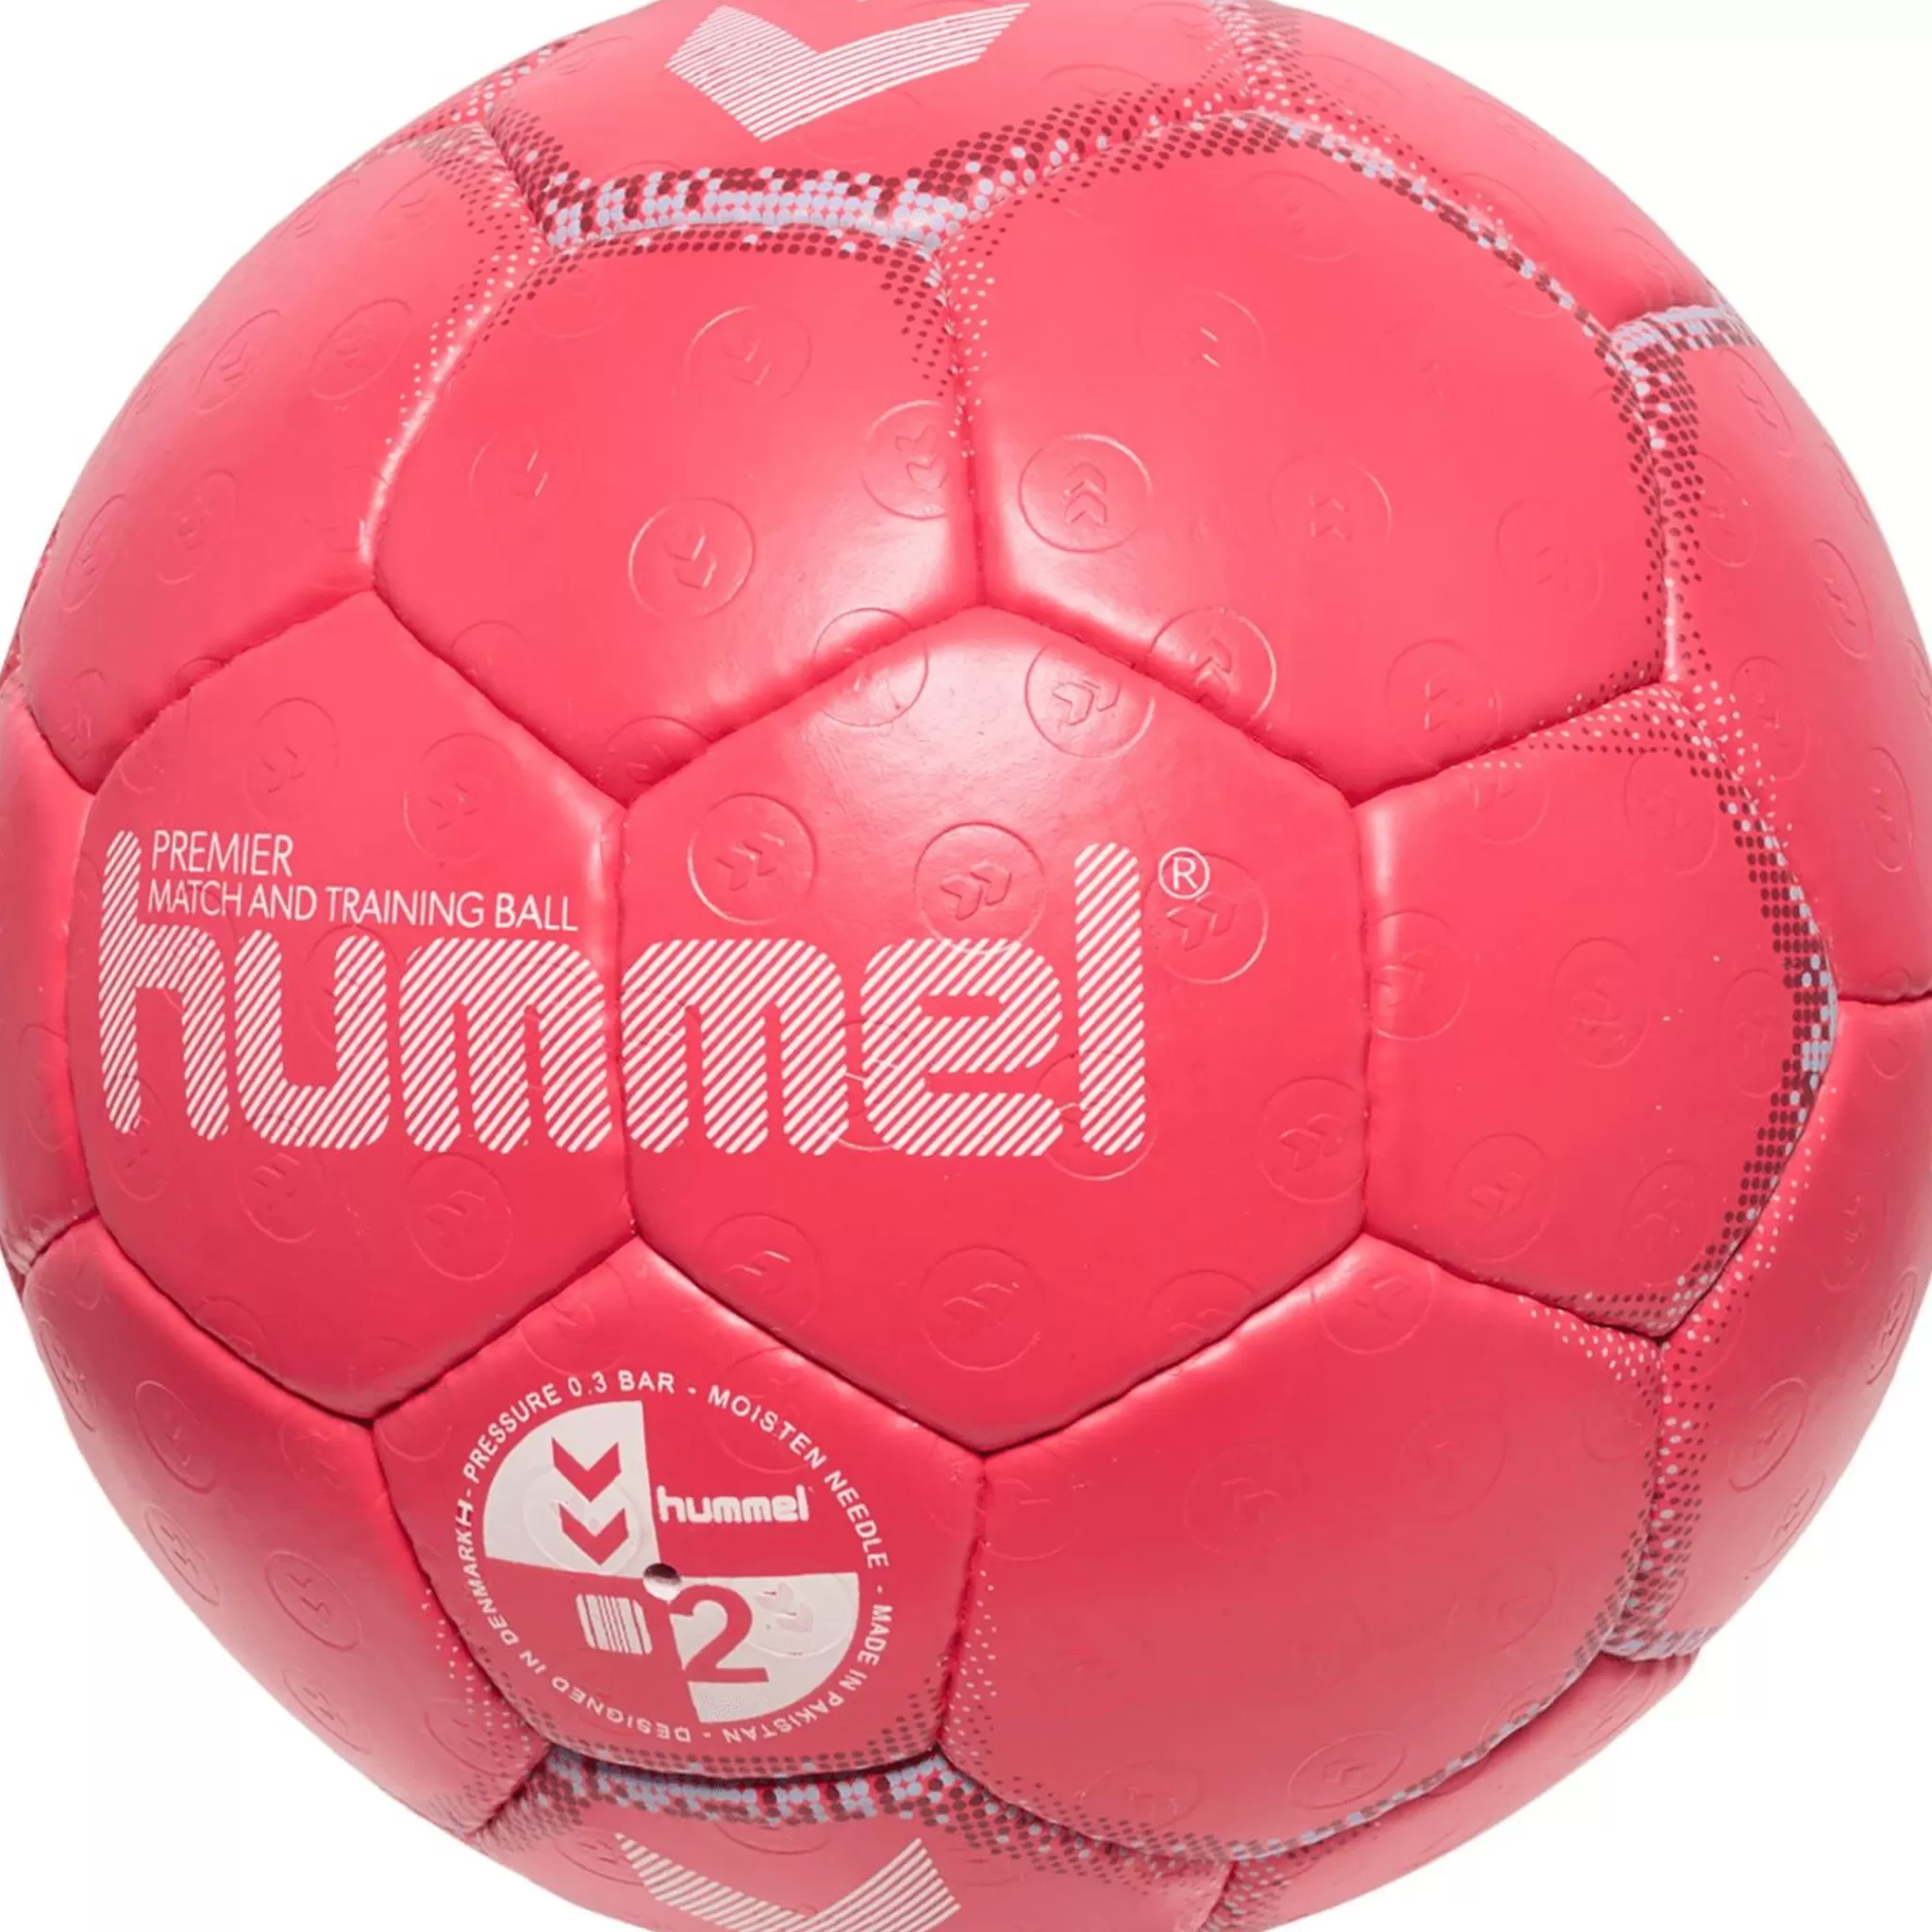 Best Sale hummel Premier Hb, Handball